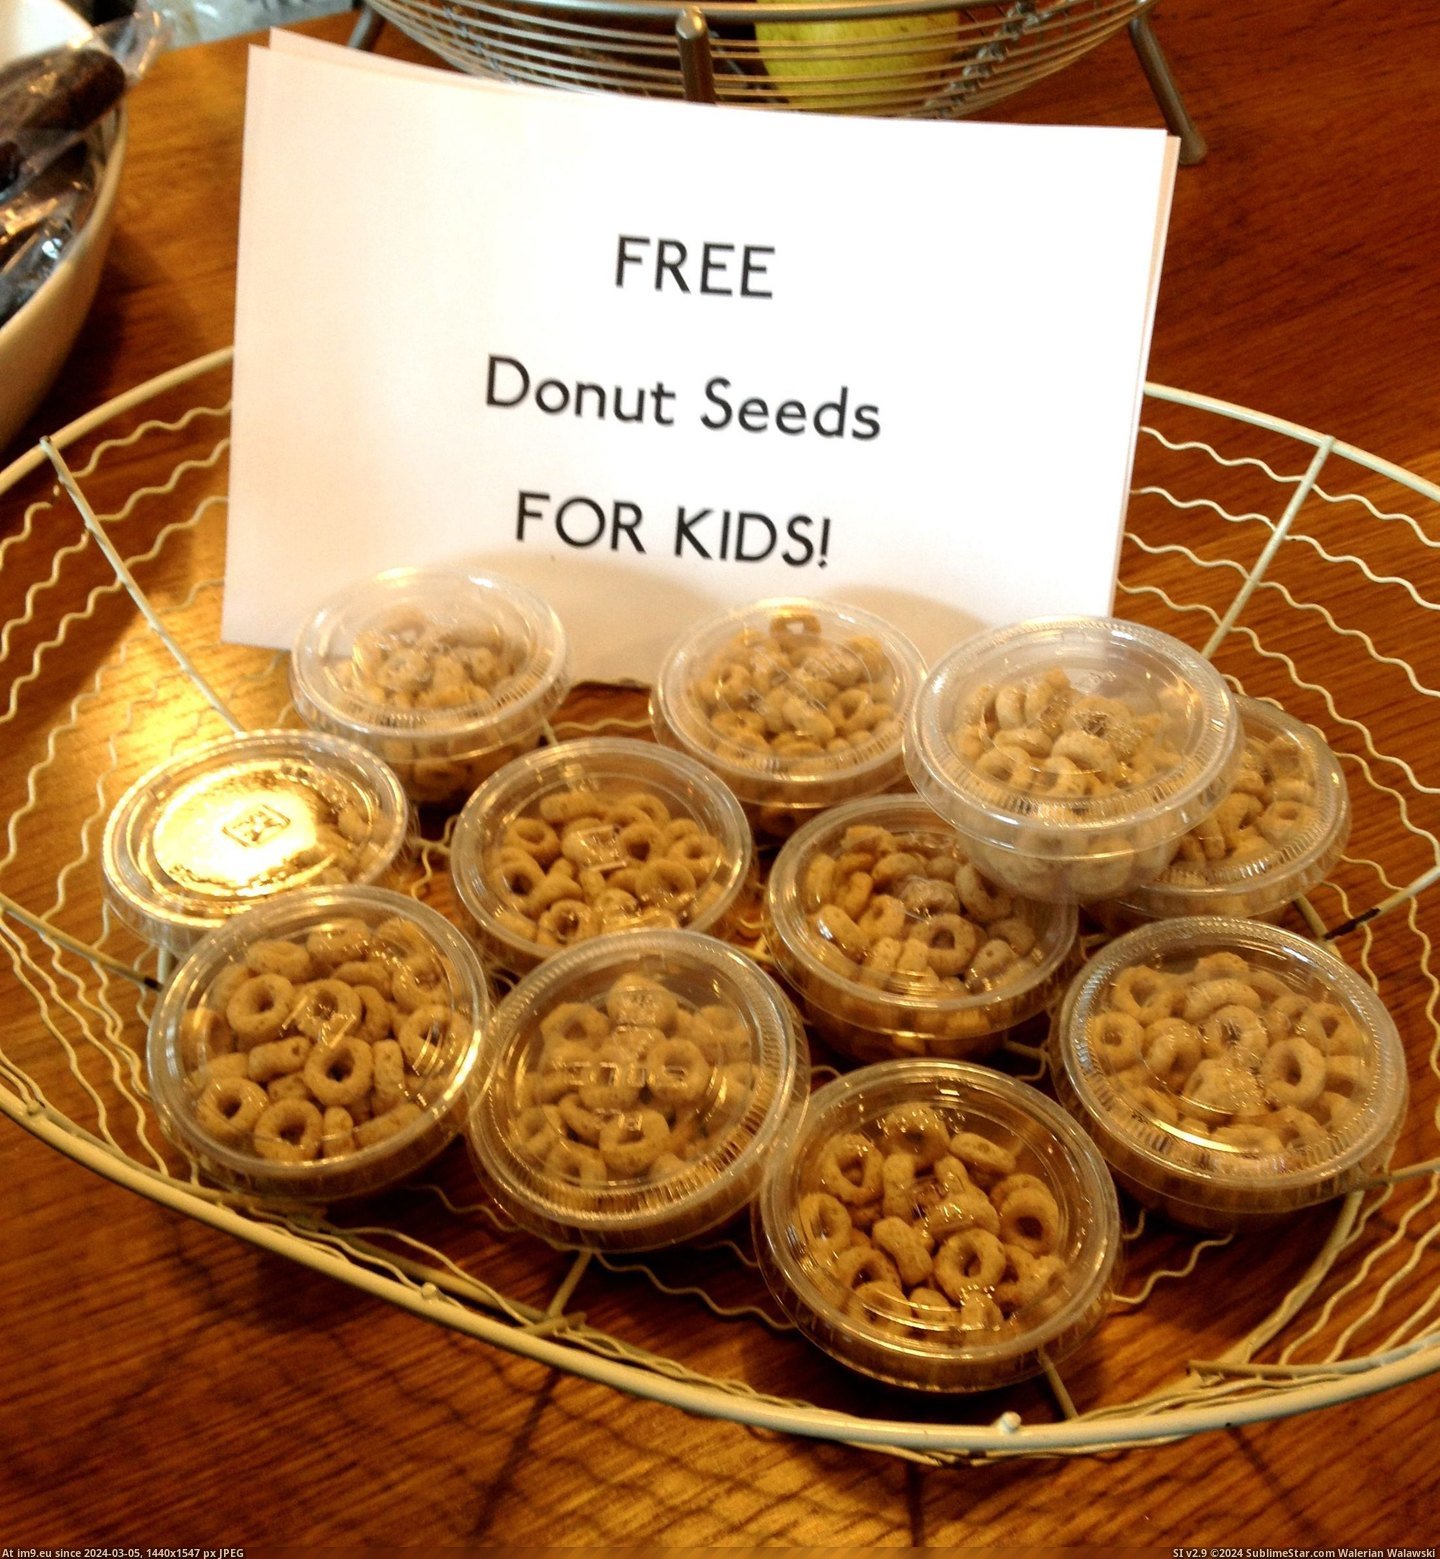 #Funny #Seeds #Donut #Free [Funny] Free Donut Seeds Pic. (Bild von album My r/FUNNY favs))